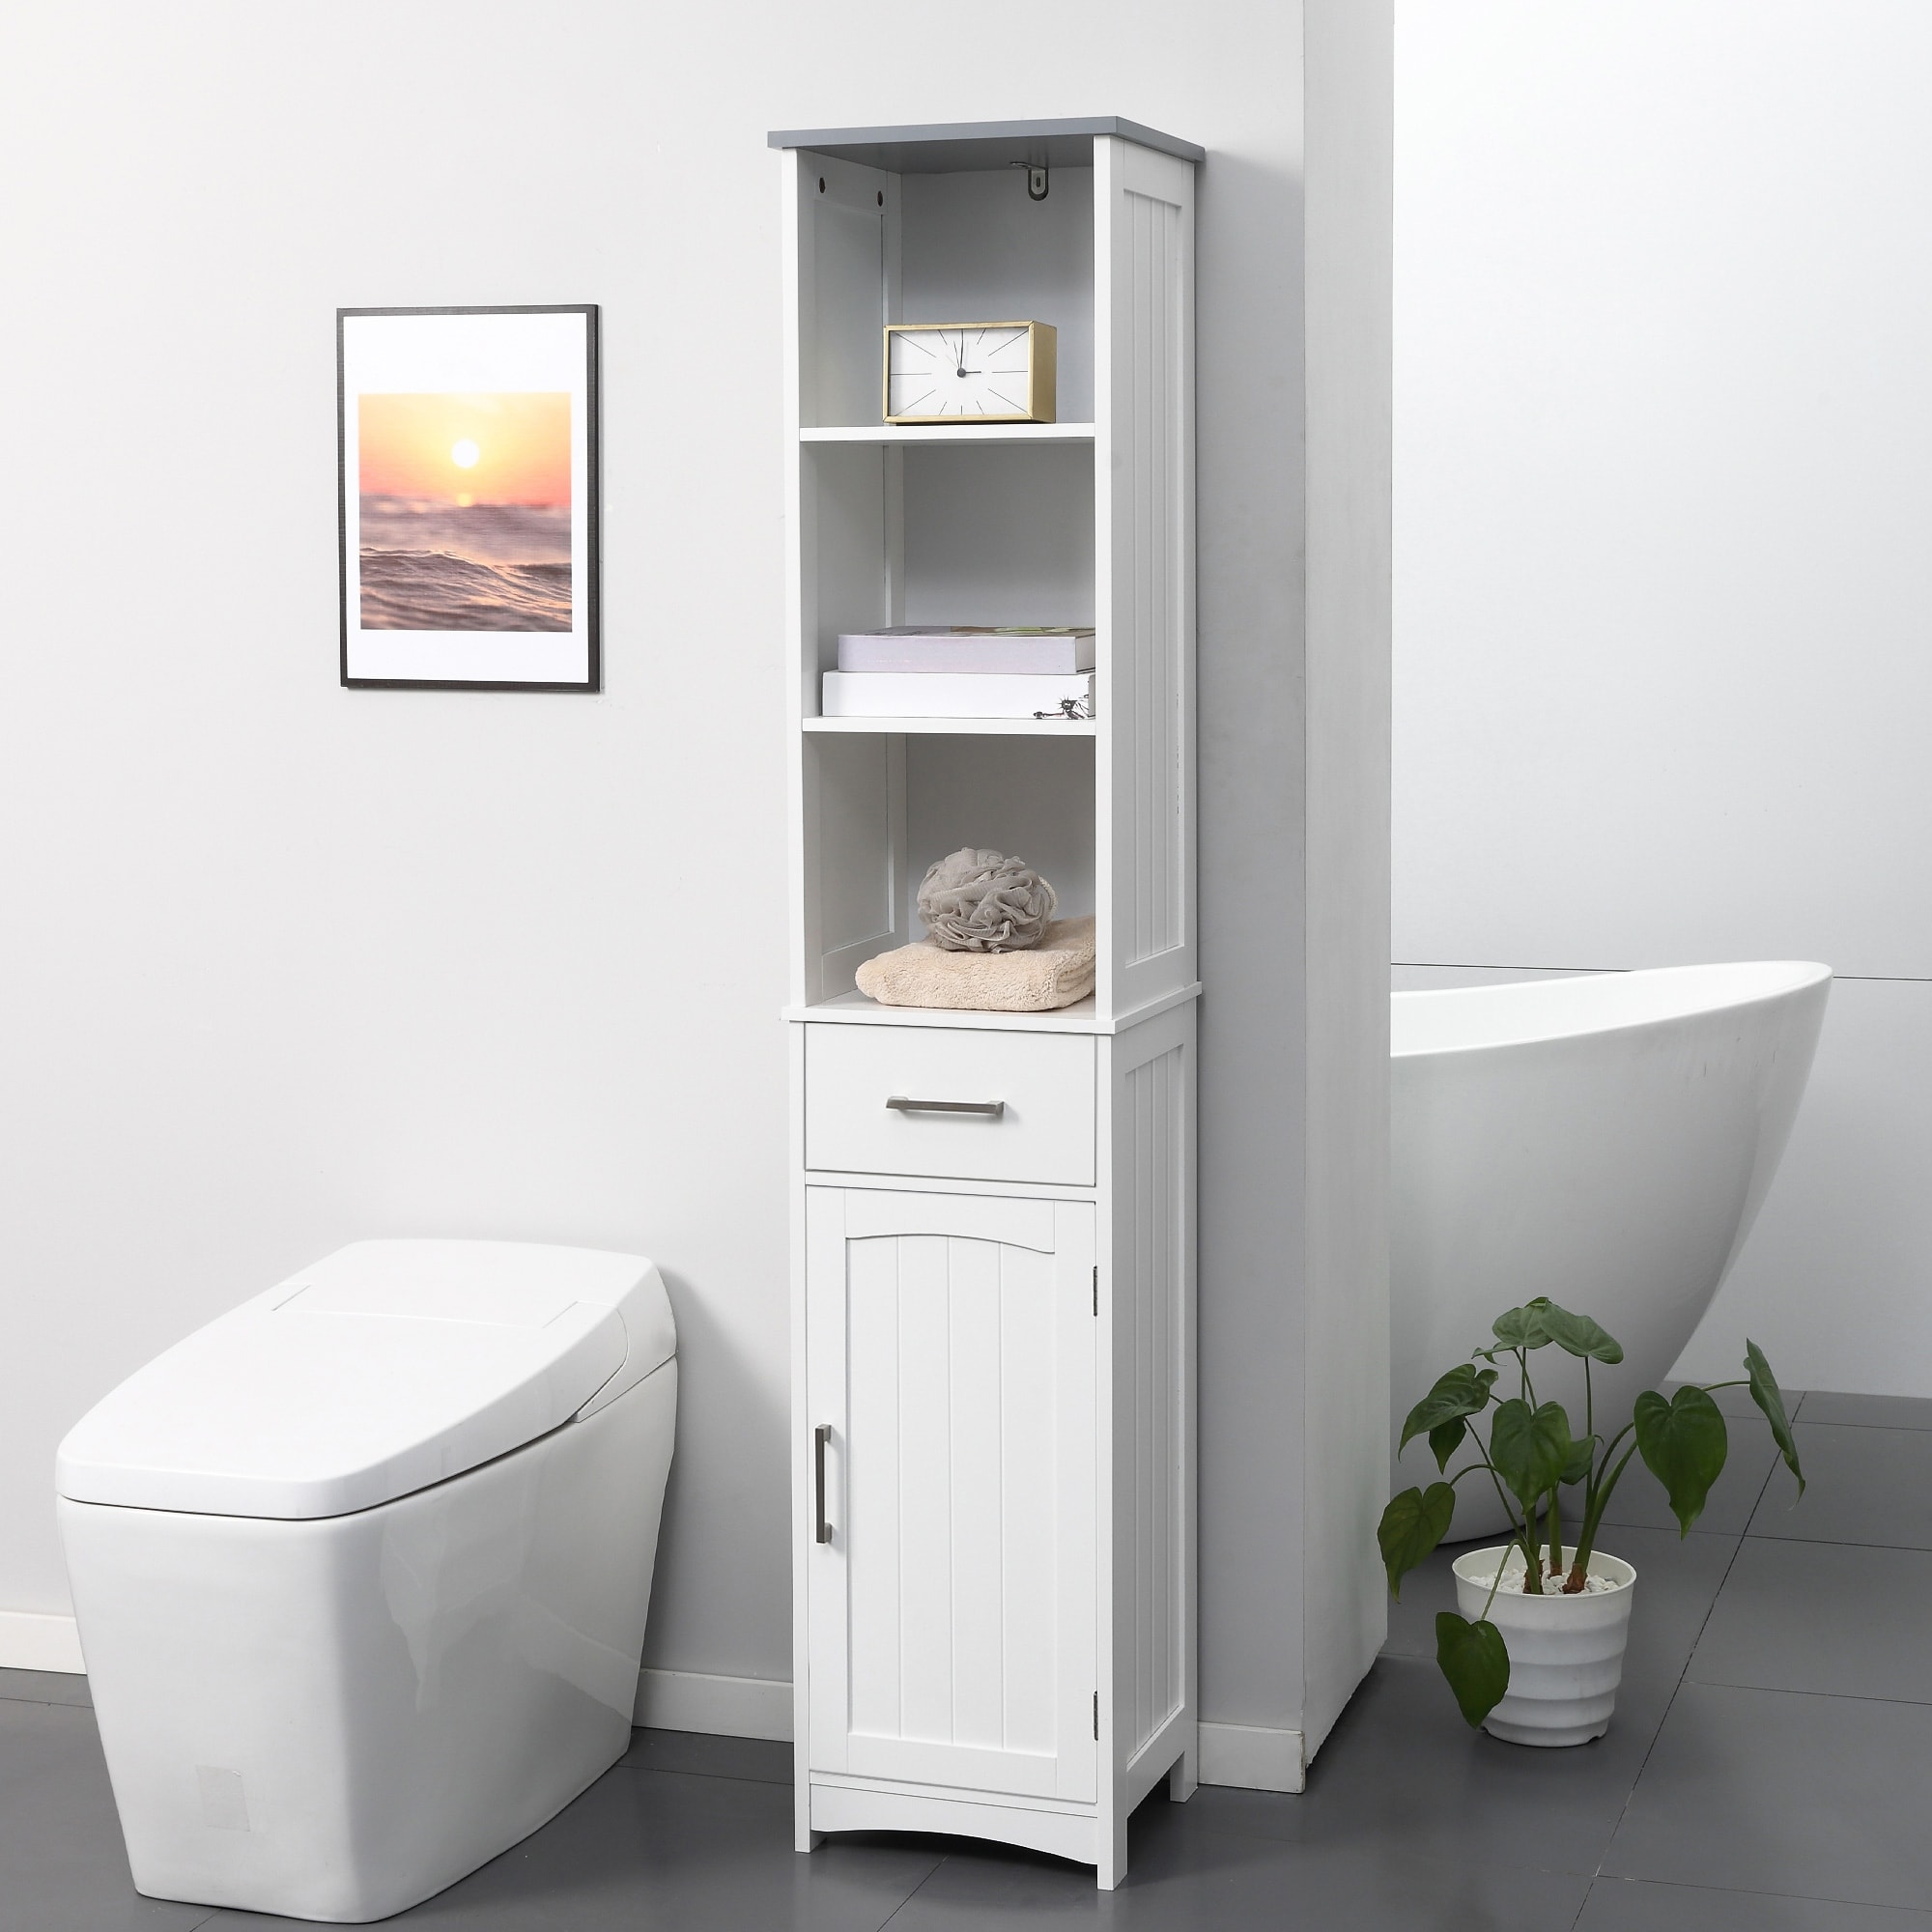 https://ak1.ostkcdn.com/images/products/is/images/direct/20b90aa708c7b2f913931b73656d1d67db006e40/kleankin-Tall-Bathroom-Storage-Cabinet-with-3-Tier-Shelf%2C-Cupboard%2C-Drawer%2C-Door.jpg